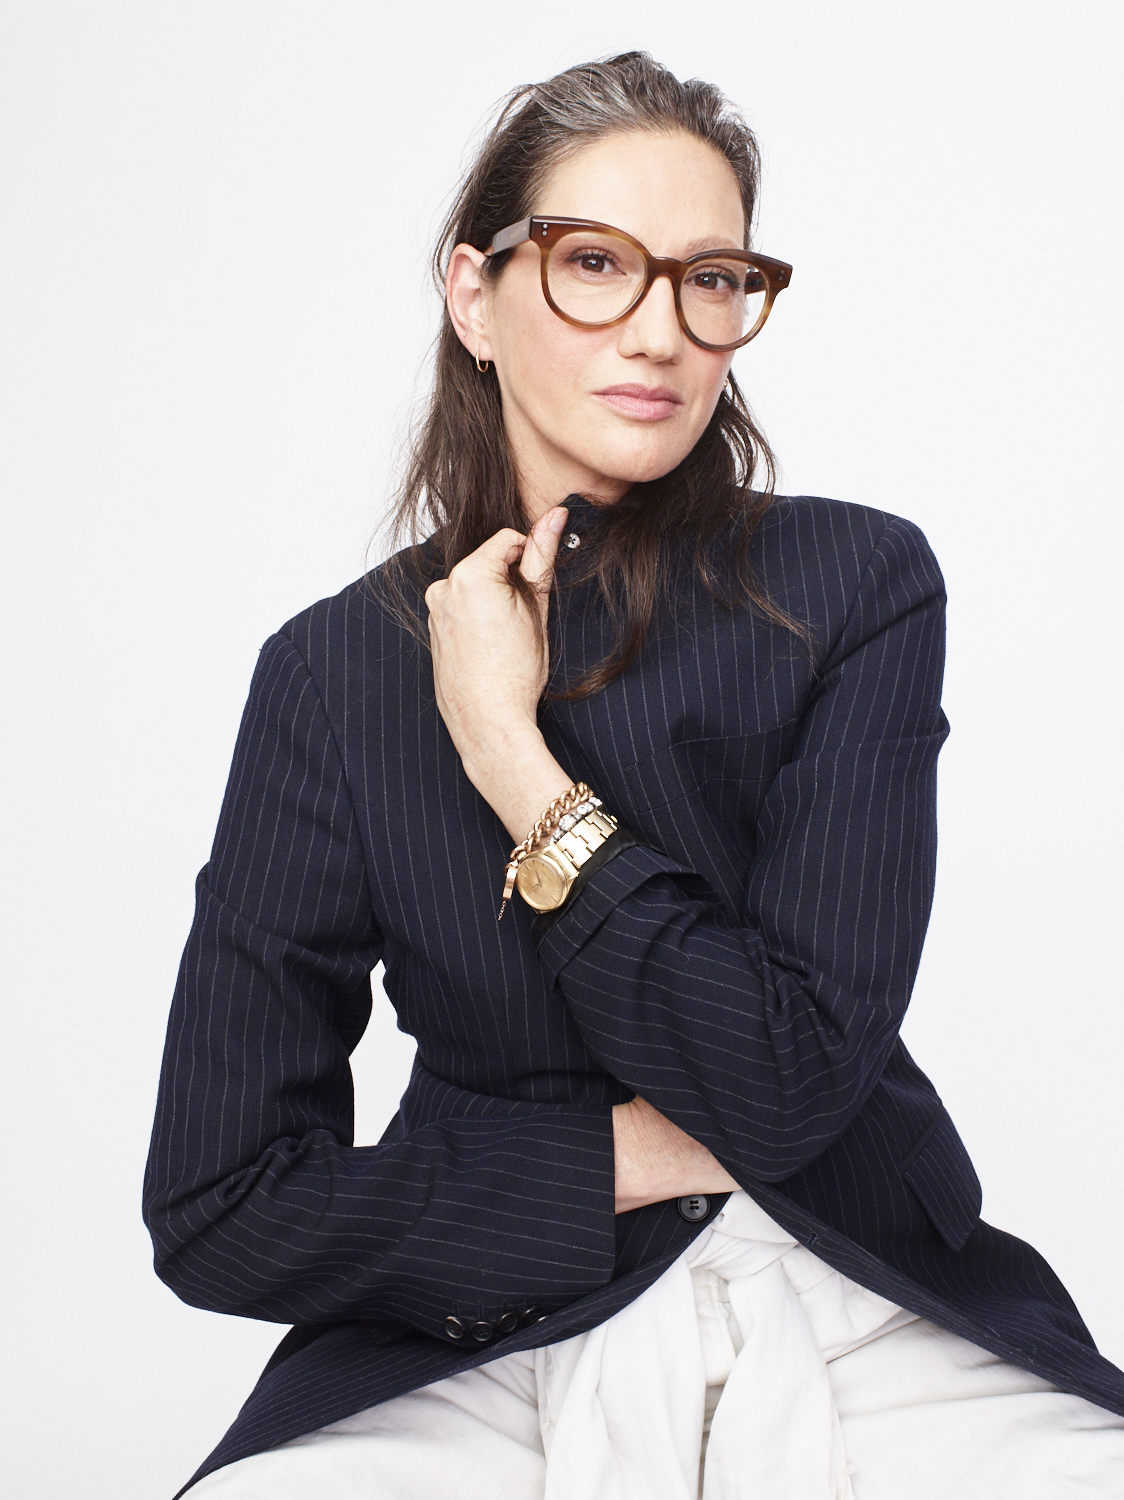 Reintroducing Jenna Lyons: The Designer & Fashion Executive Talks TV, News